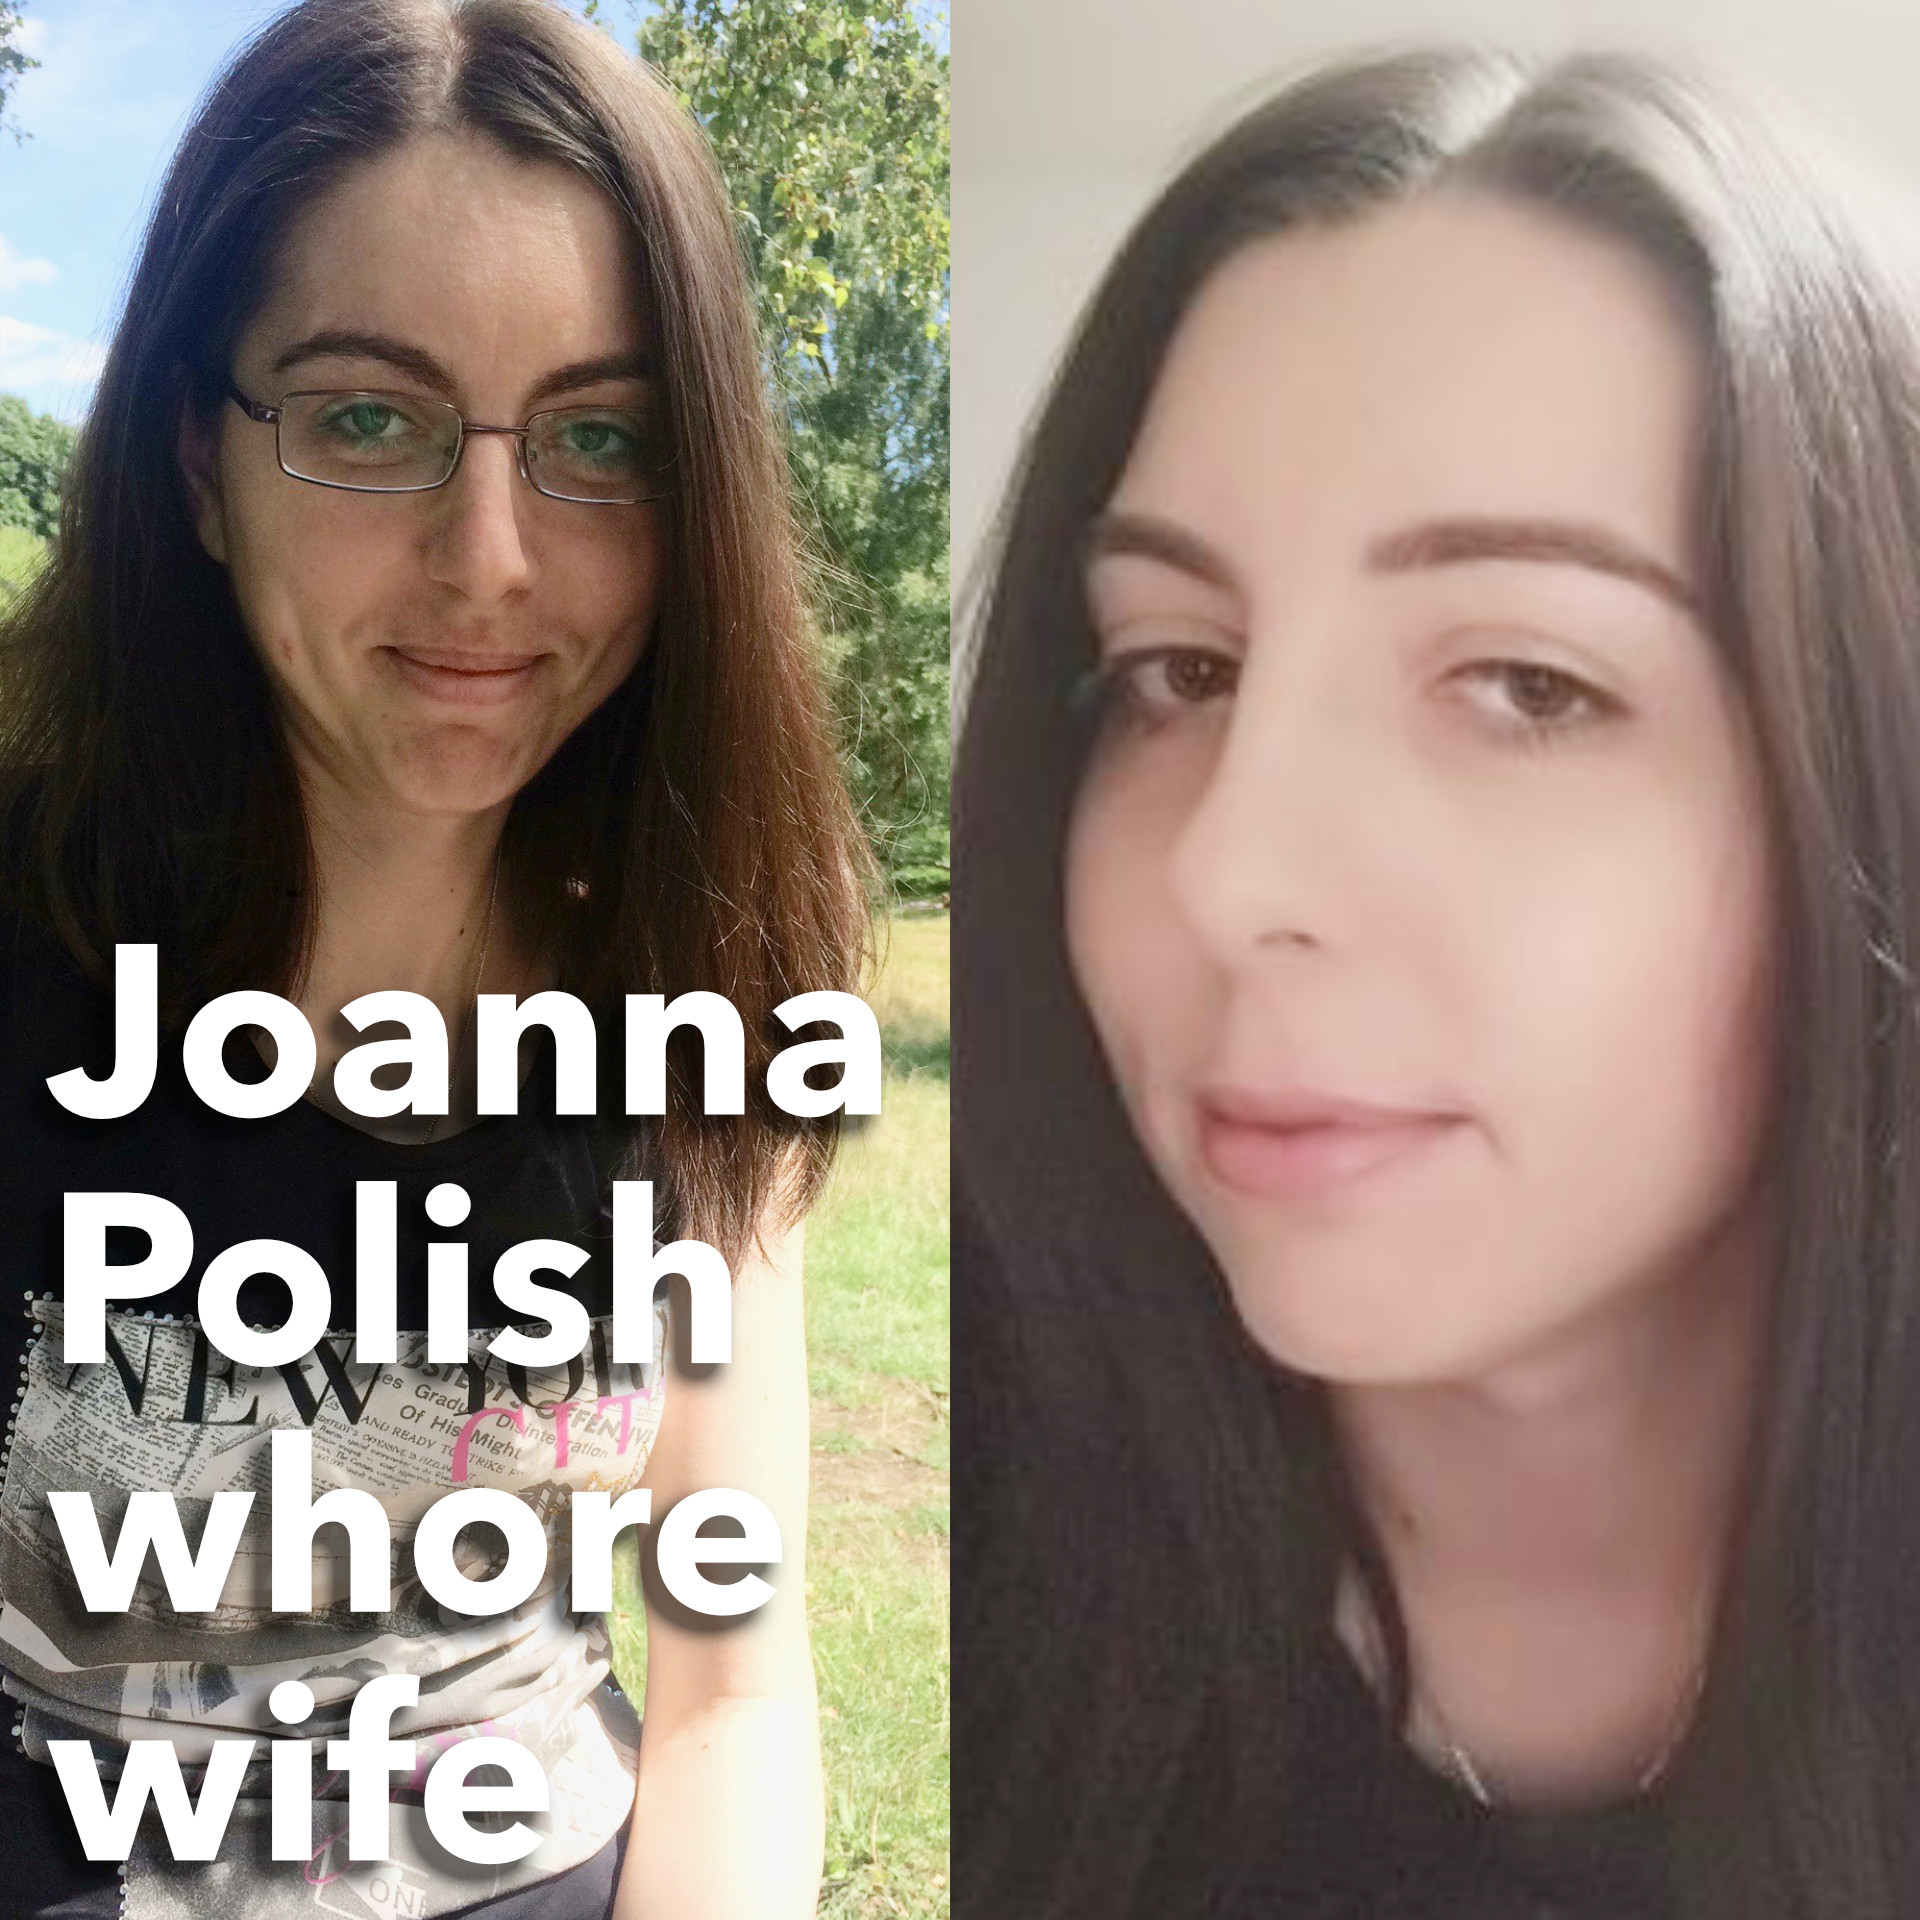 Joanna Polish hairy wife slut - N